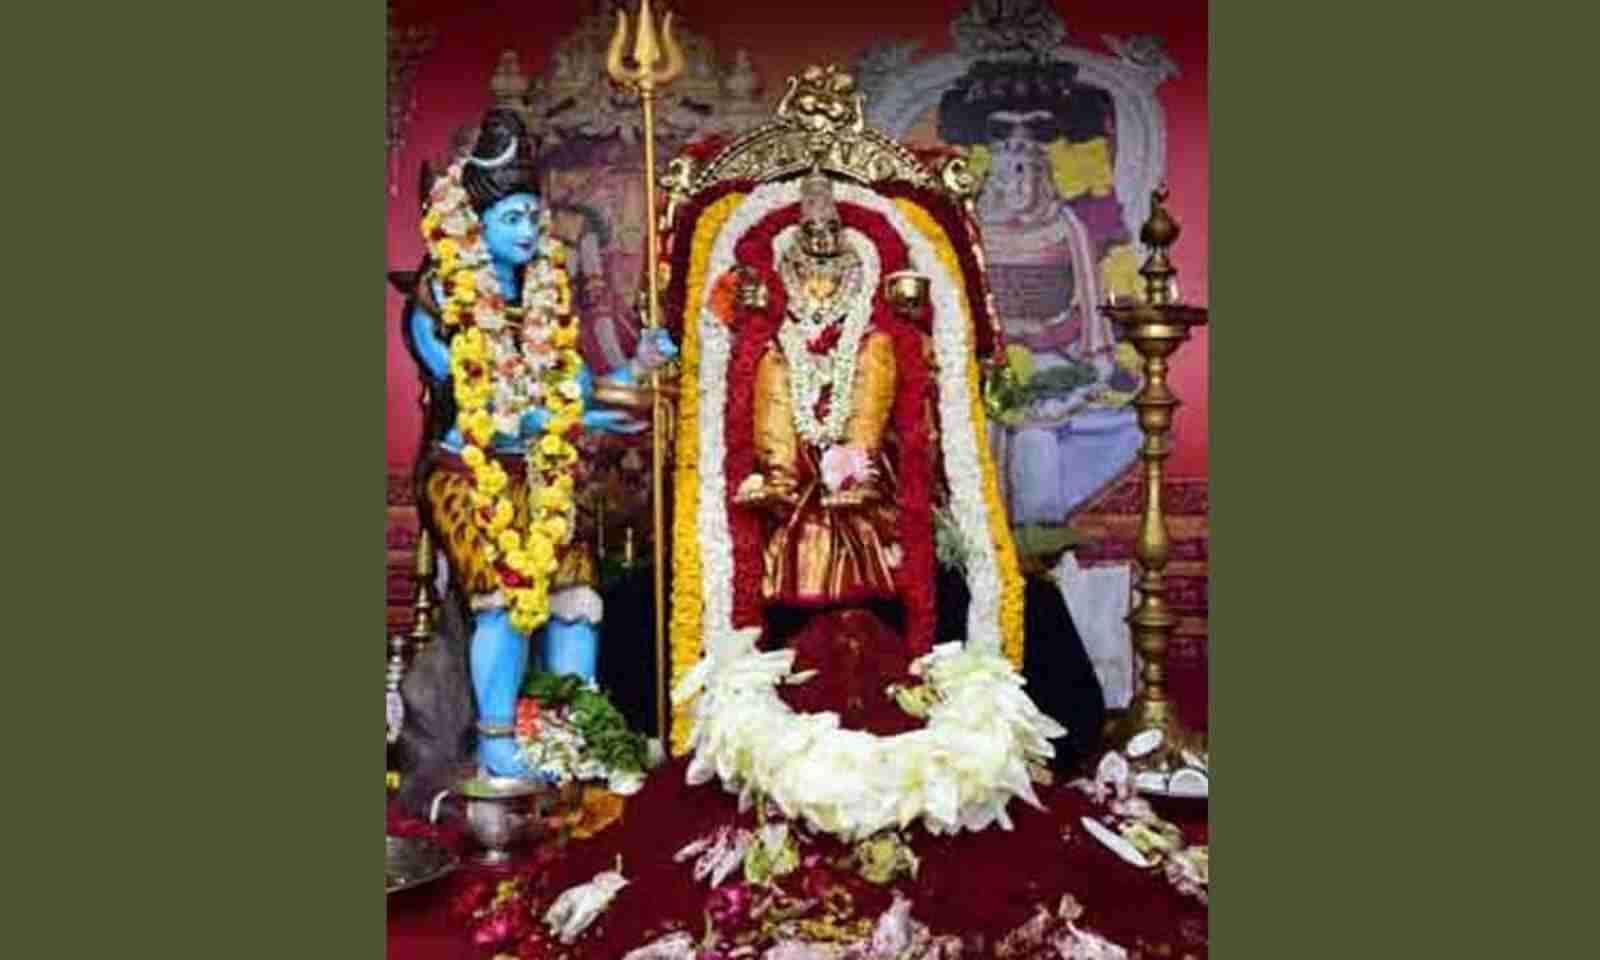 Goddess appears as Sri Annapurna Devi